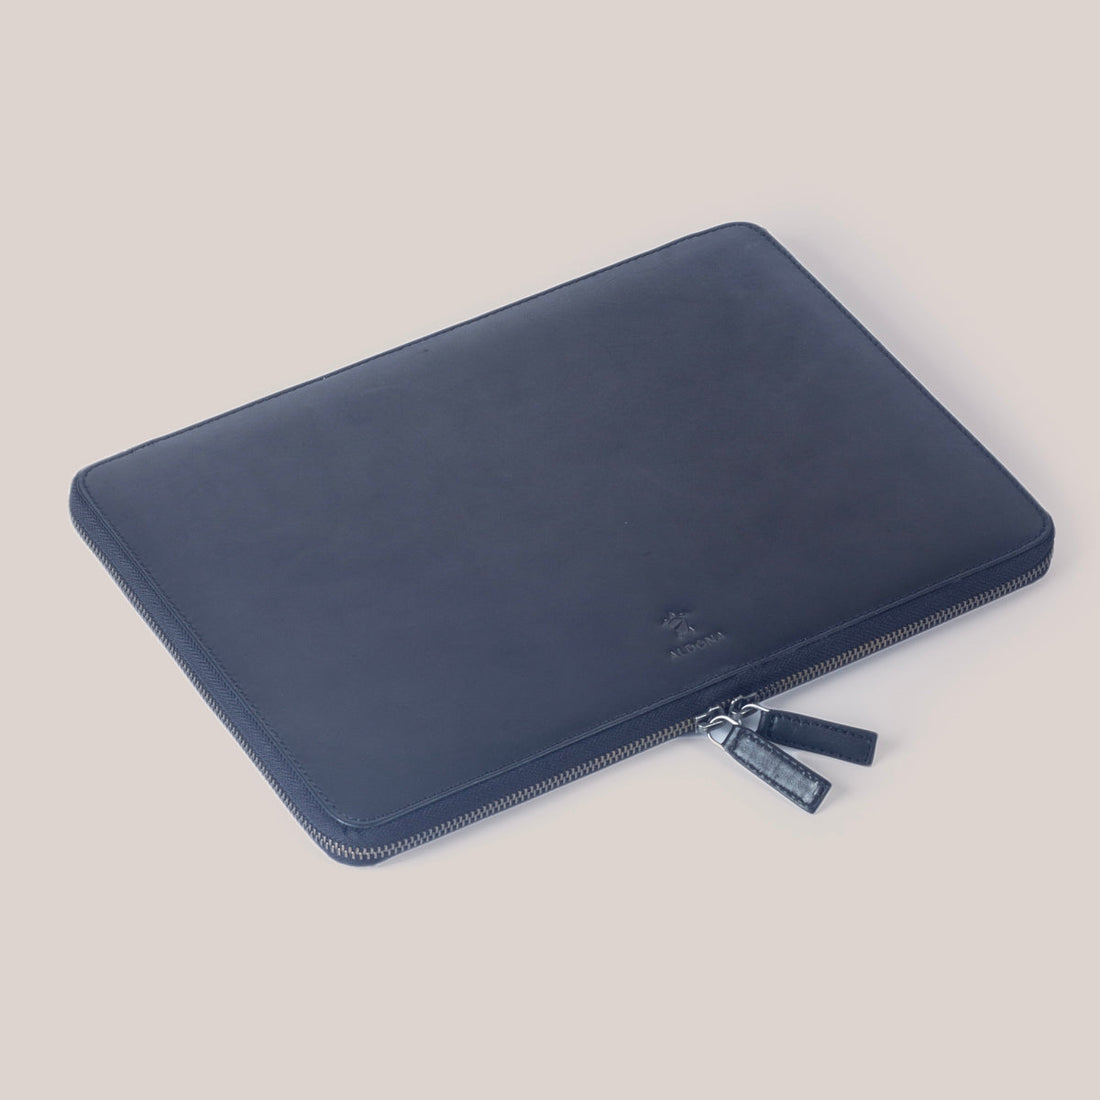 Microsoft Surface Laptop 15 Zippered Laptop Case - Vintage Tan